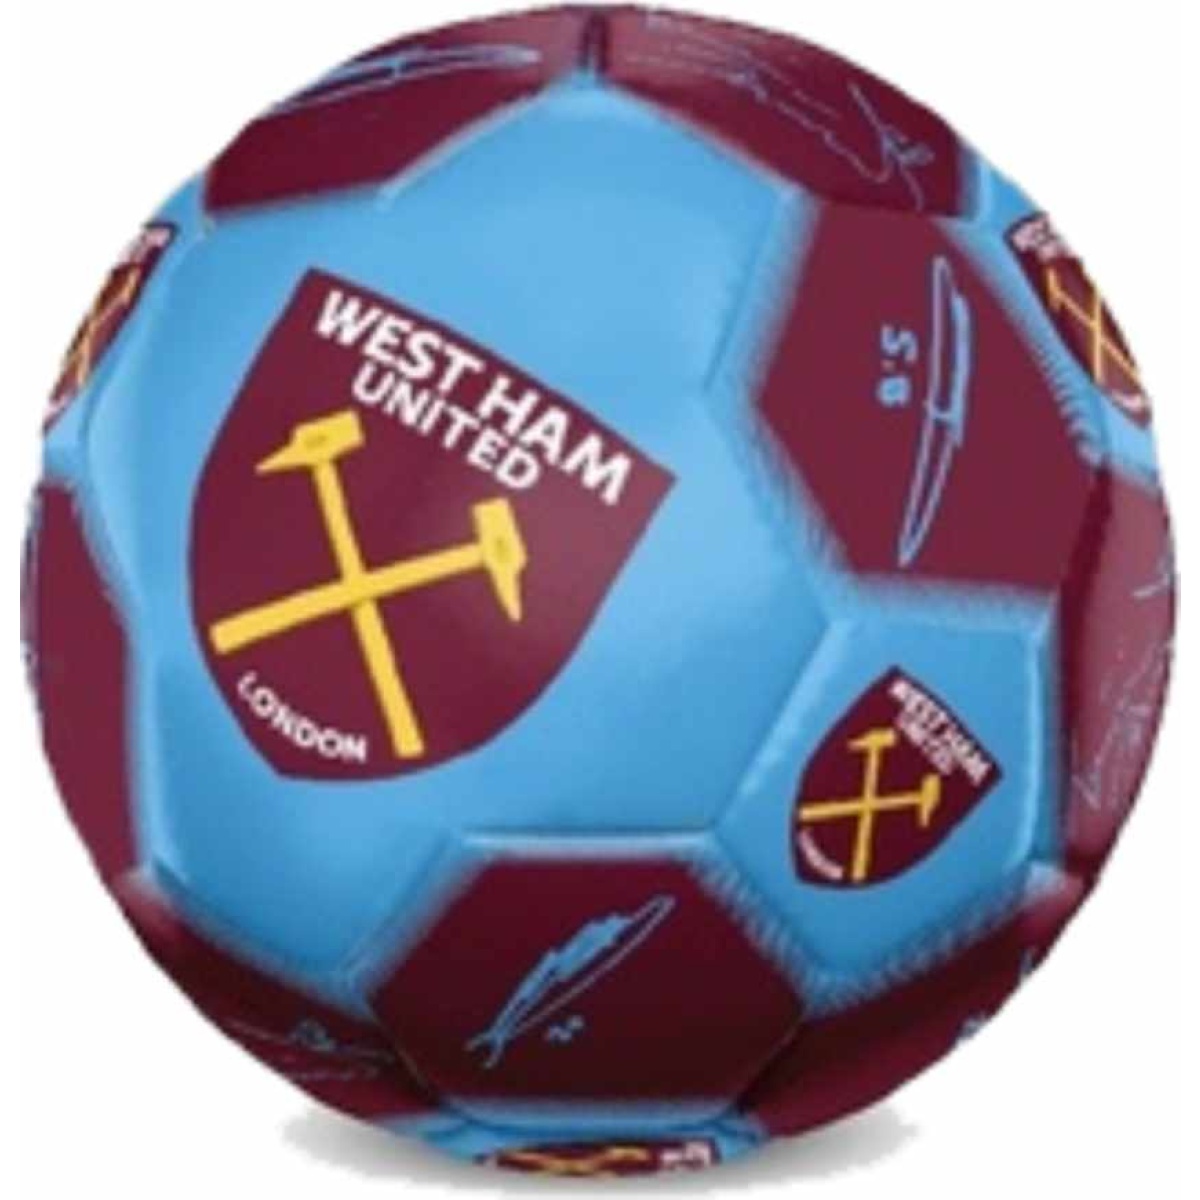 West Ham Signature Football, Football Souvenirs, Souvenirs